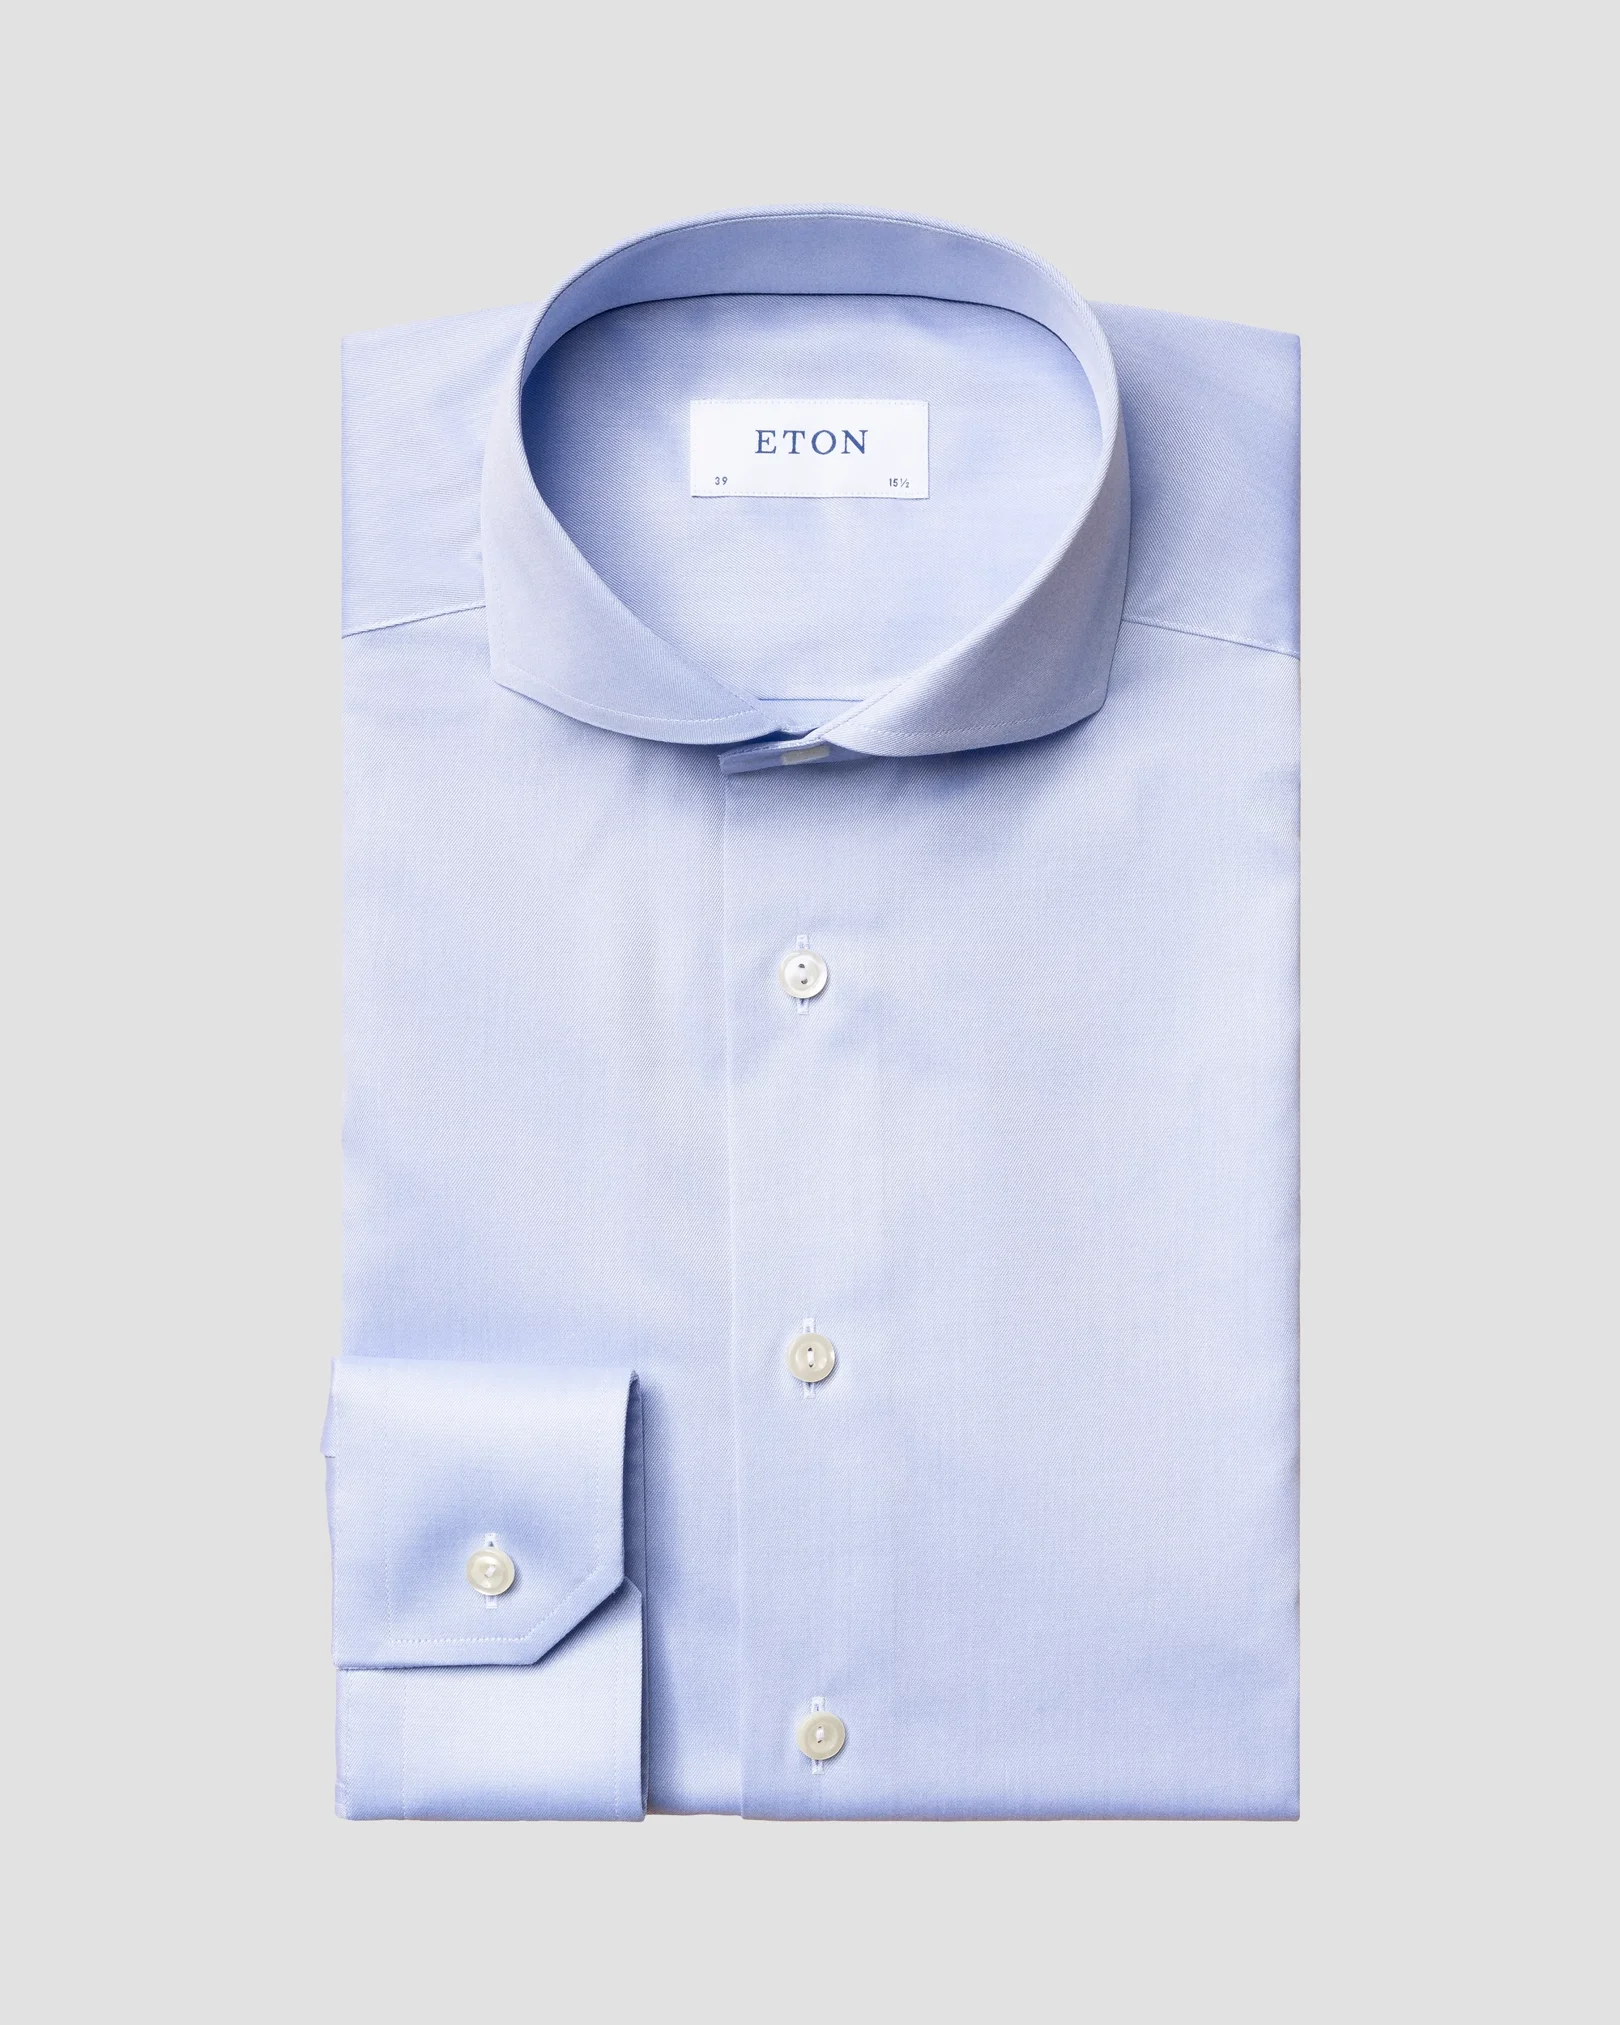 Eton - light blue shirt signature twill and extreme cut away